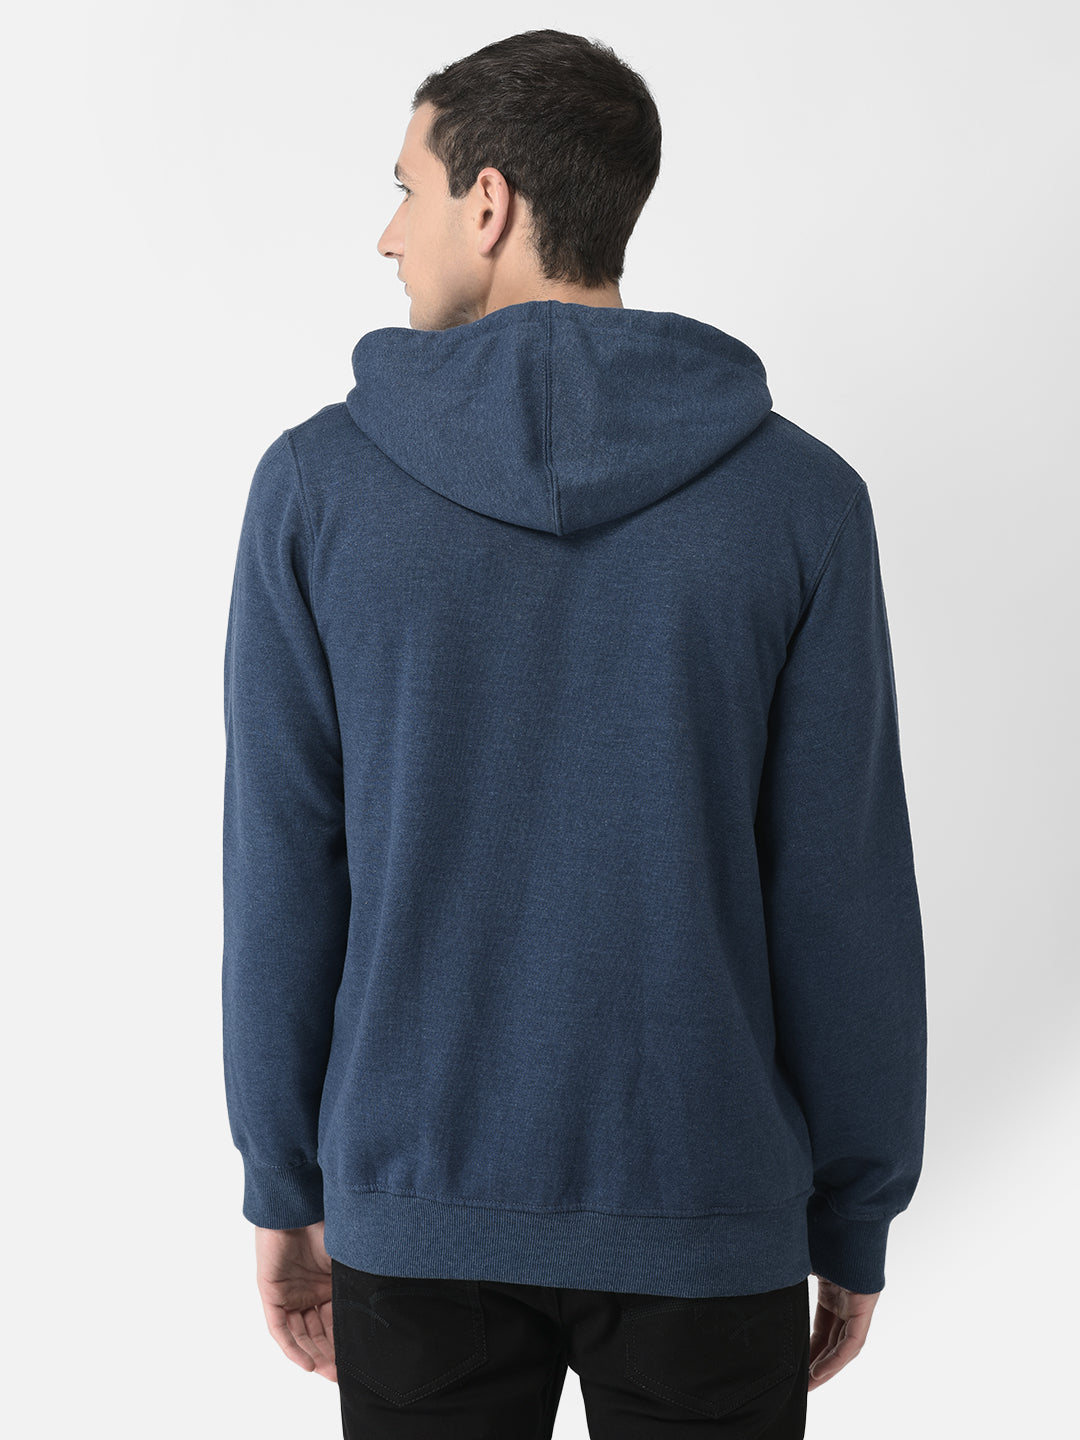  Navy Blue Zipped Sweatshirt 